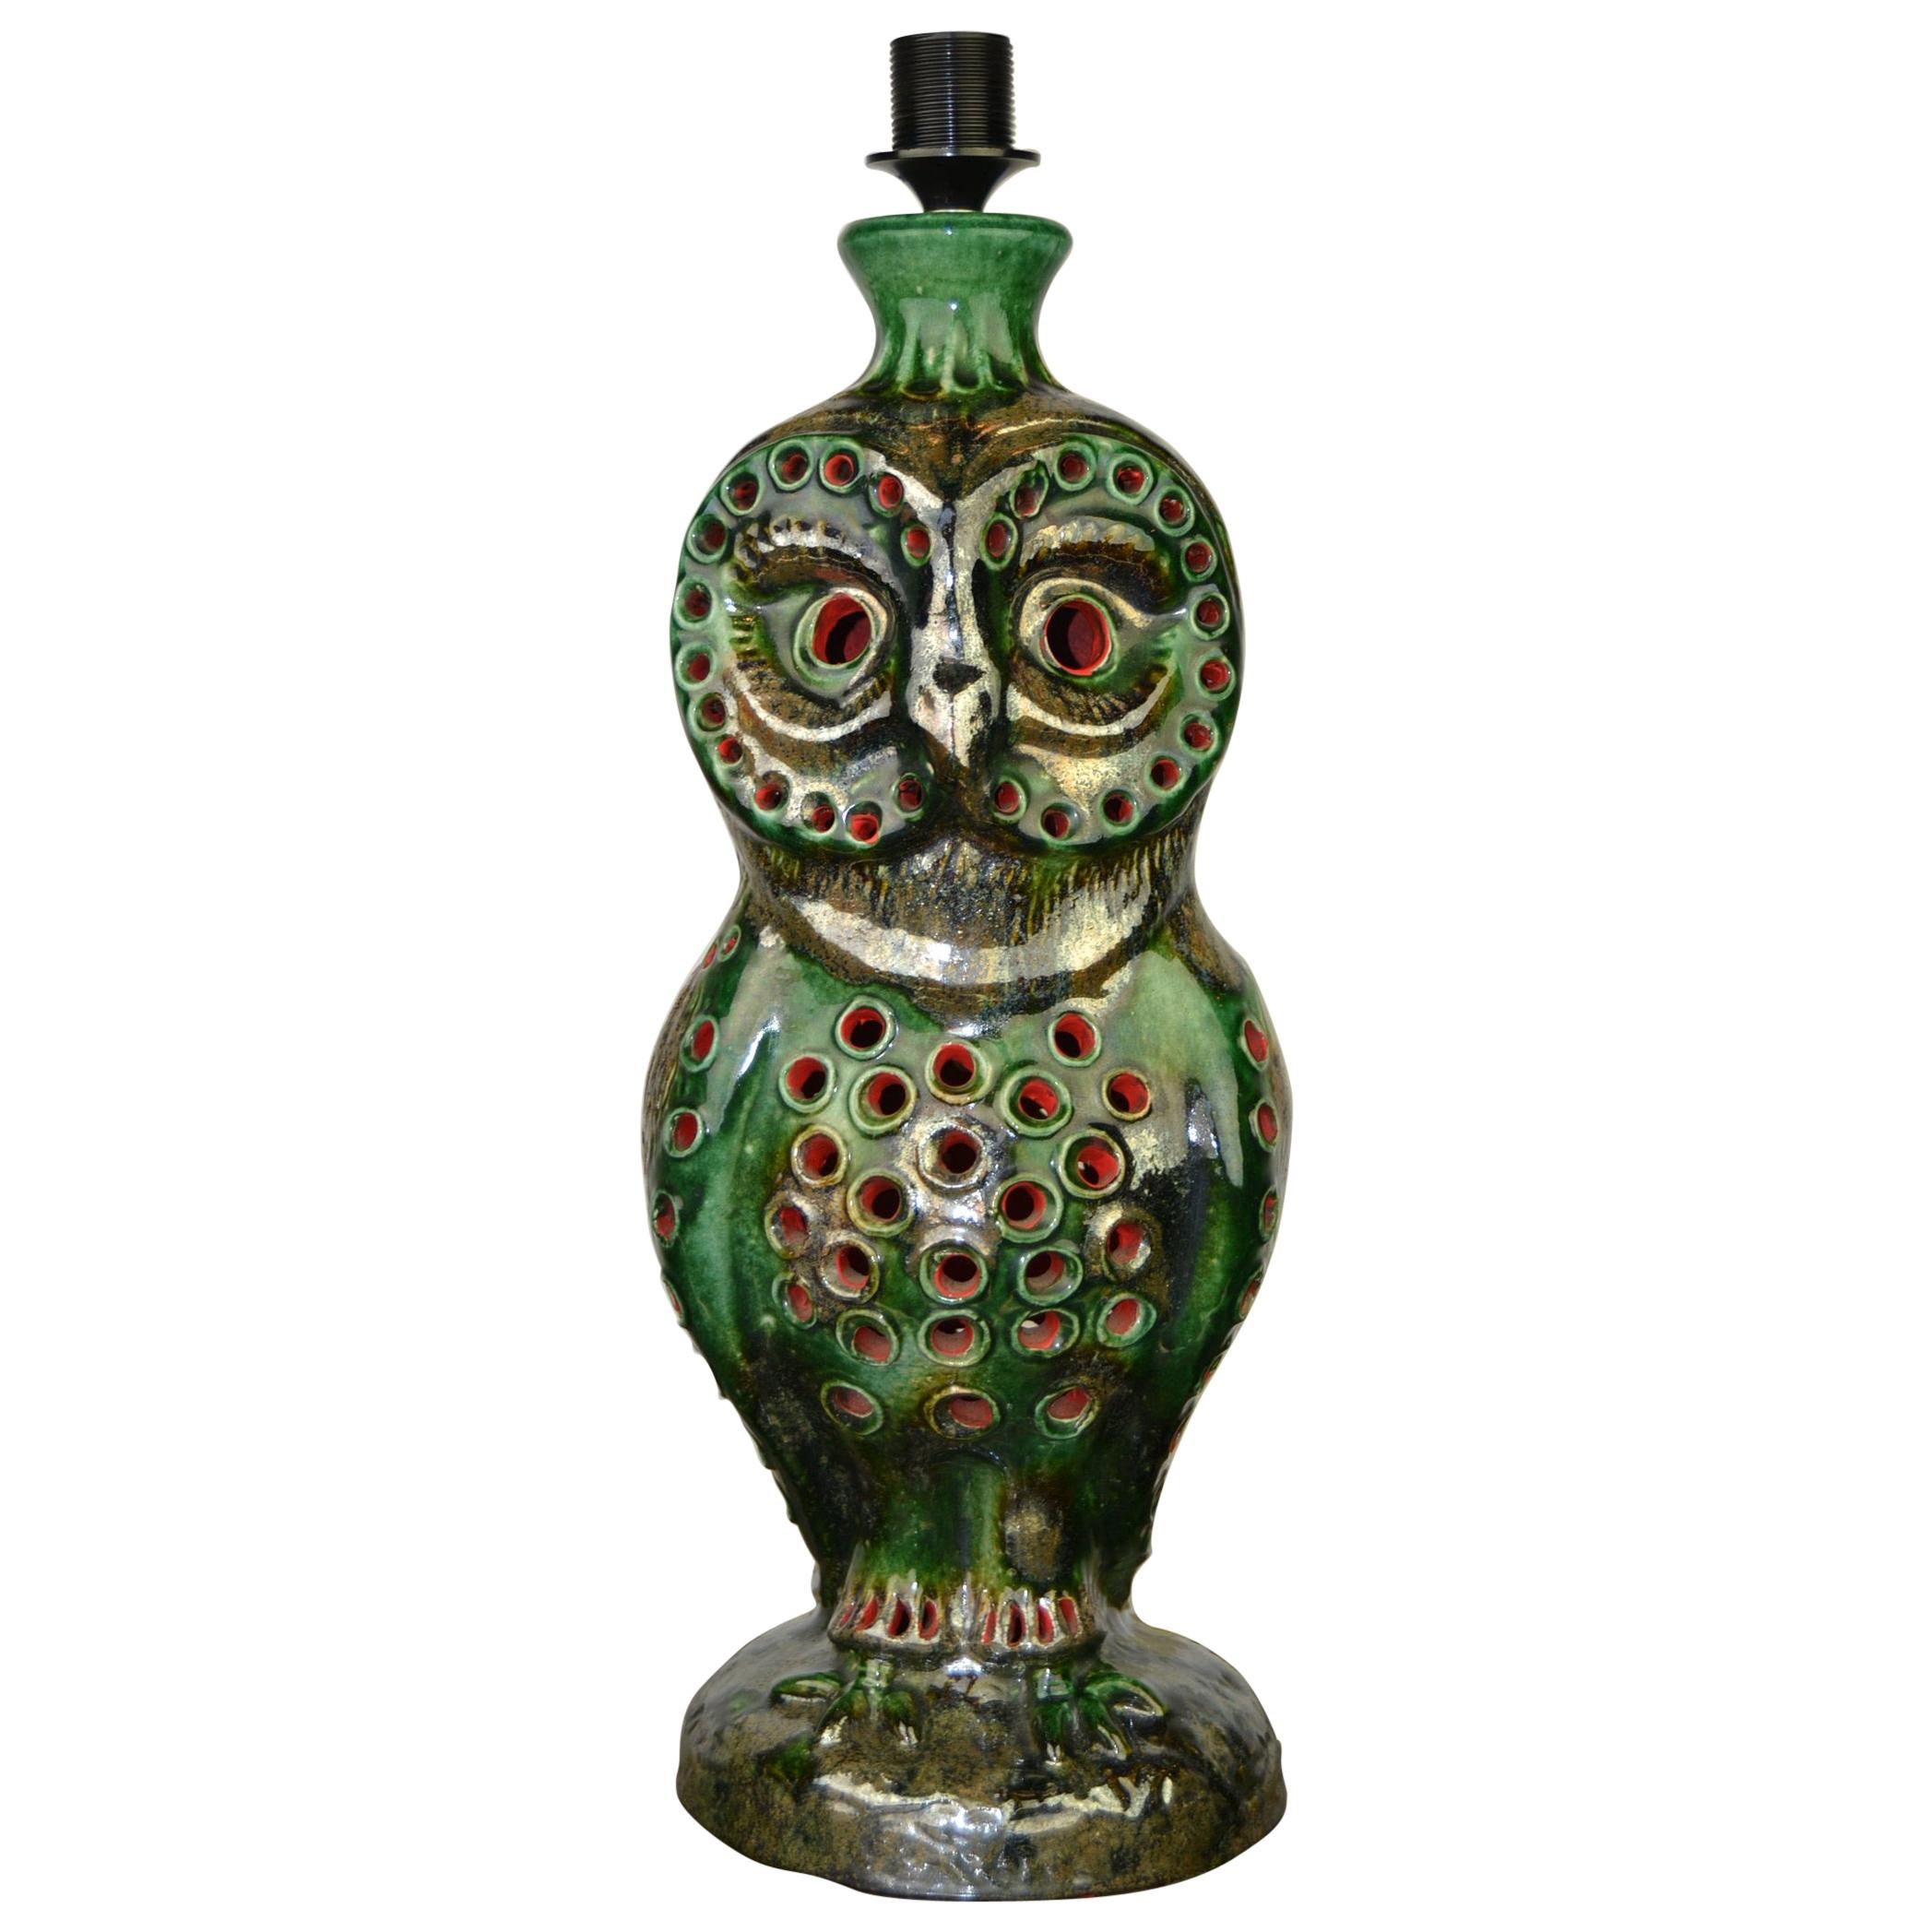 1970s Ceramic Owl Table Lamp